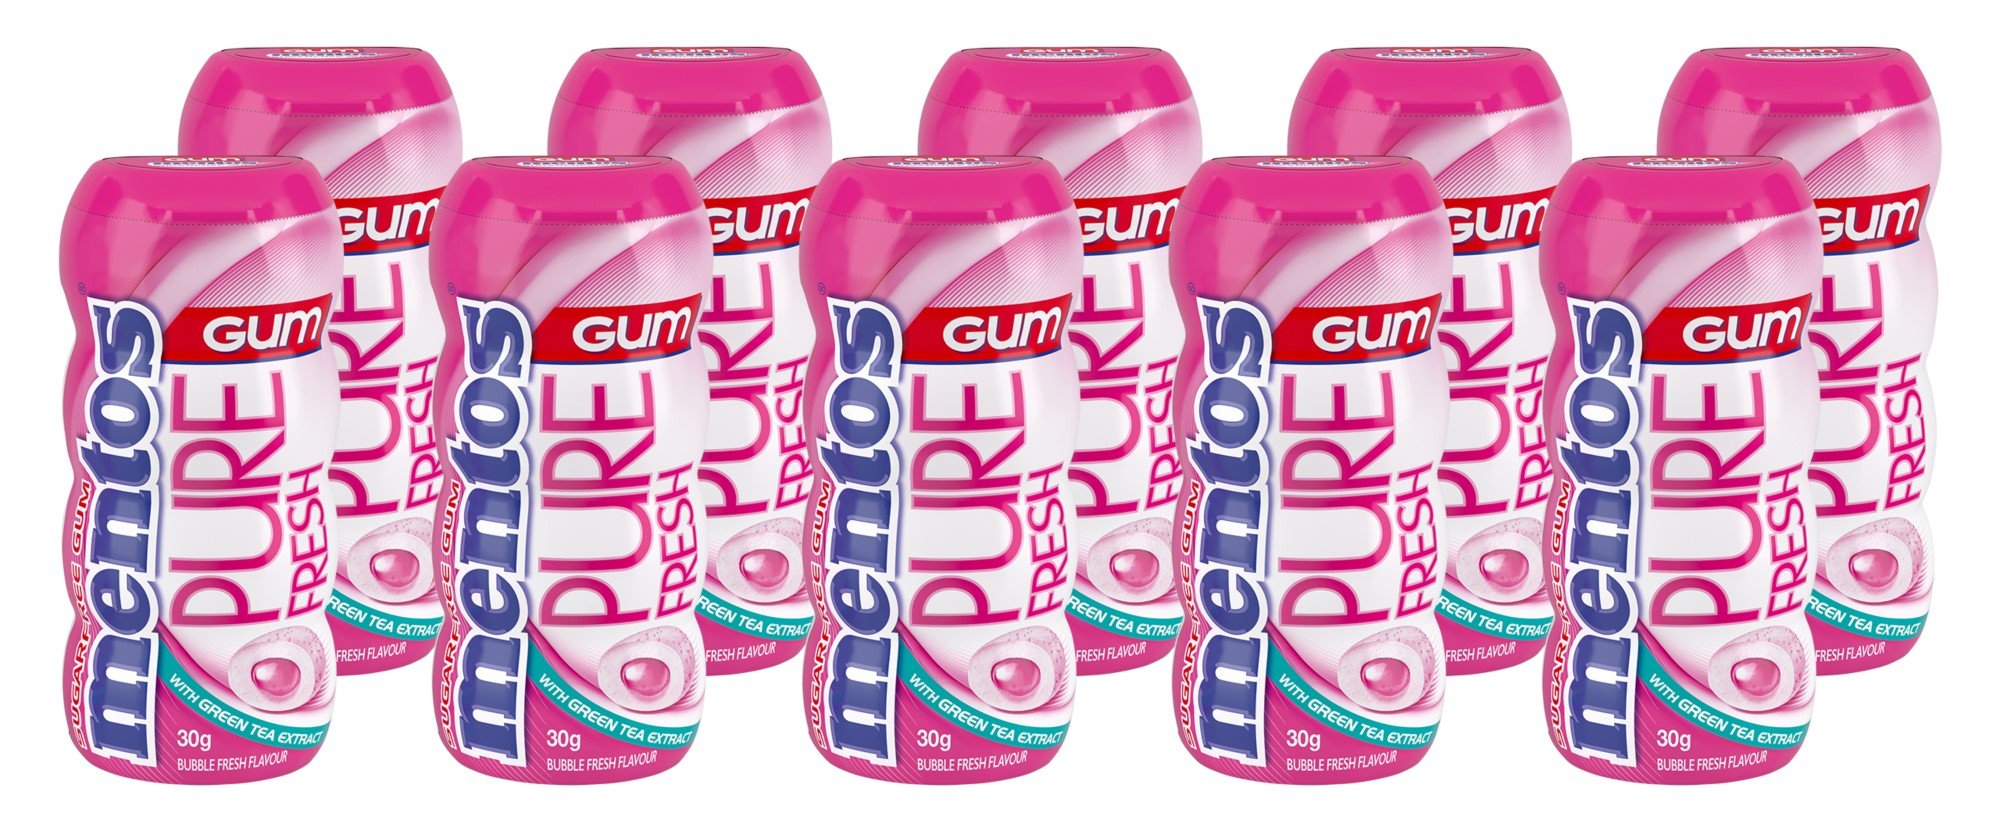 Mentos Pure Fresh Chewing Gum, Bubble Fresh 30g (Box of 10)